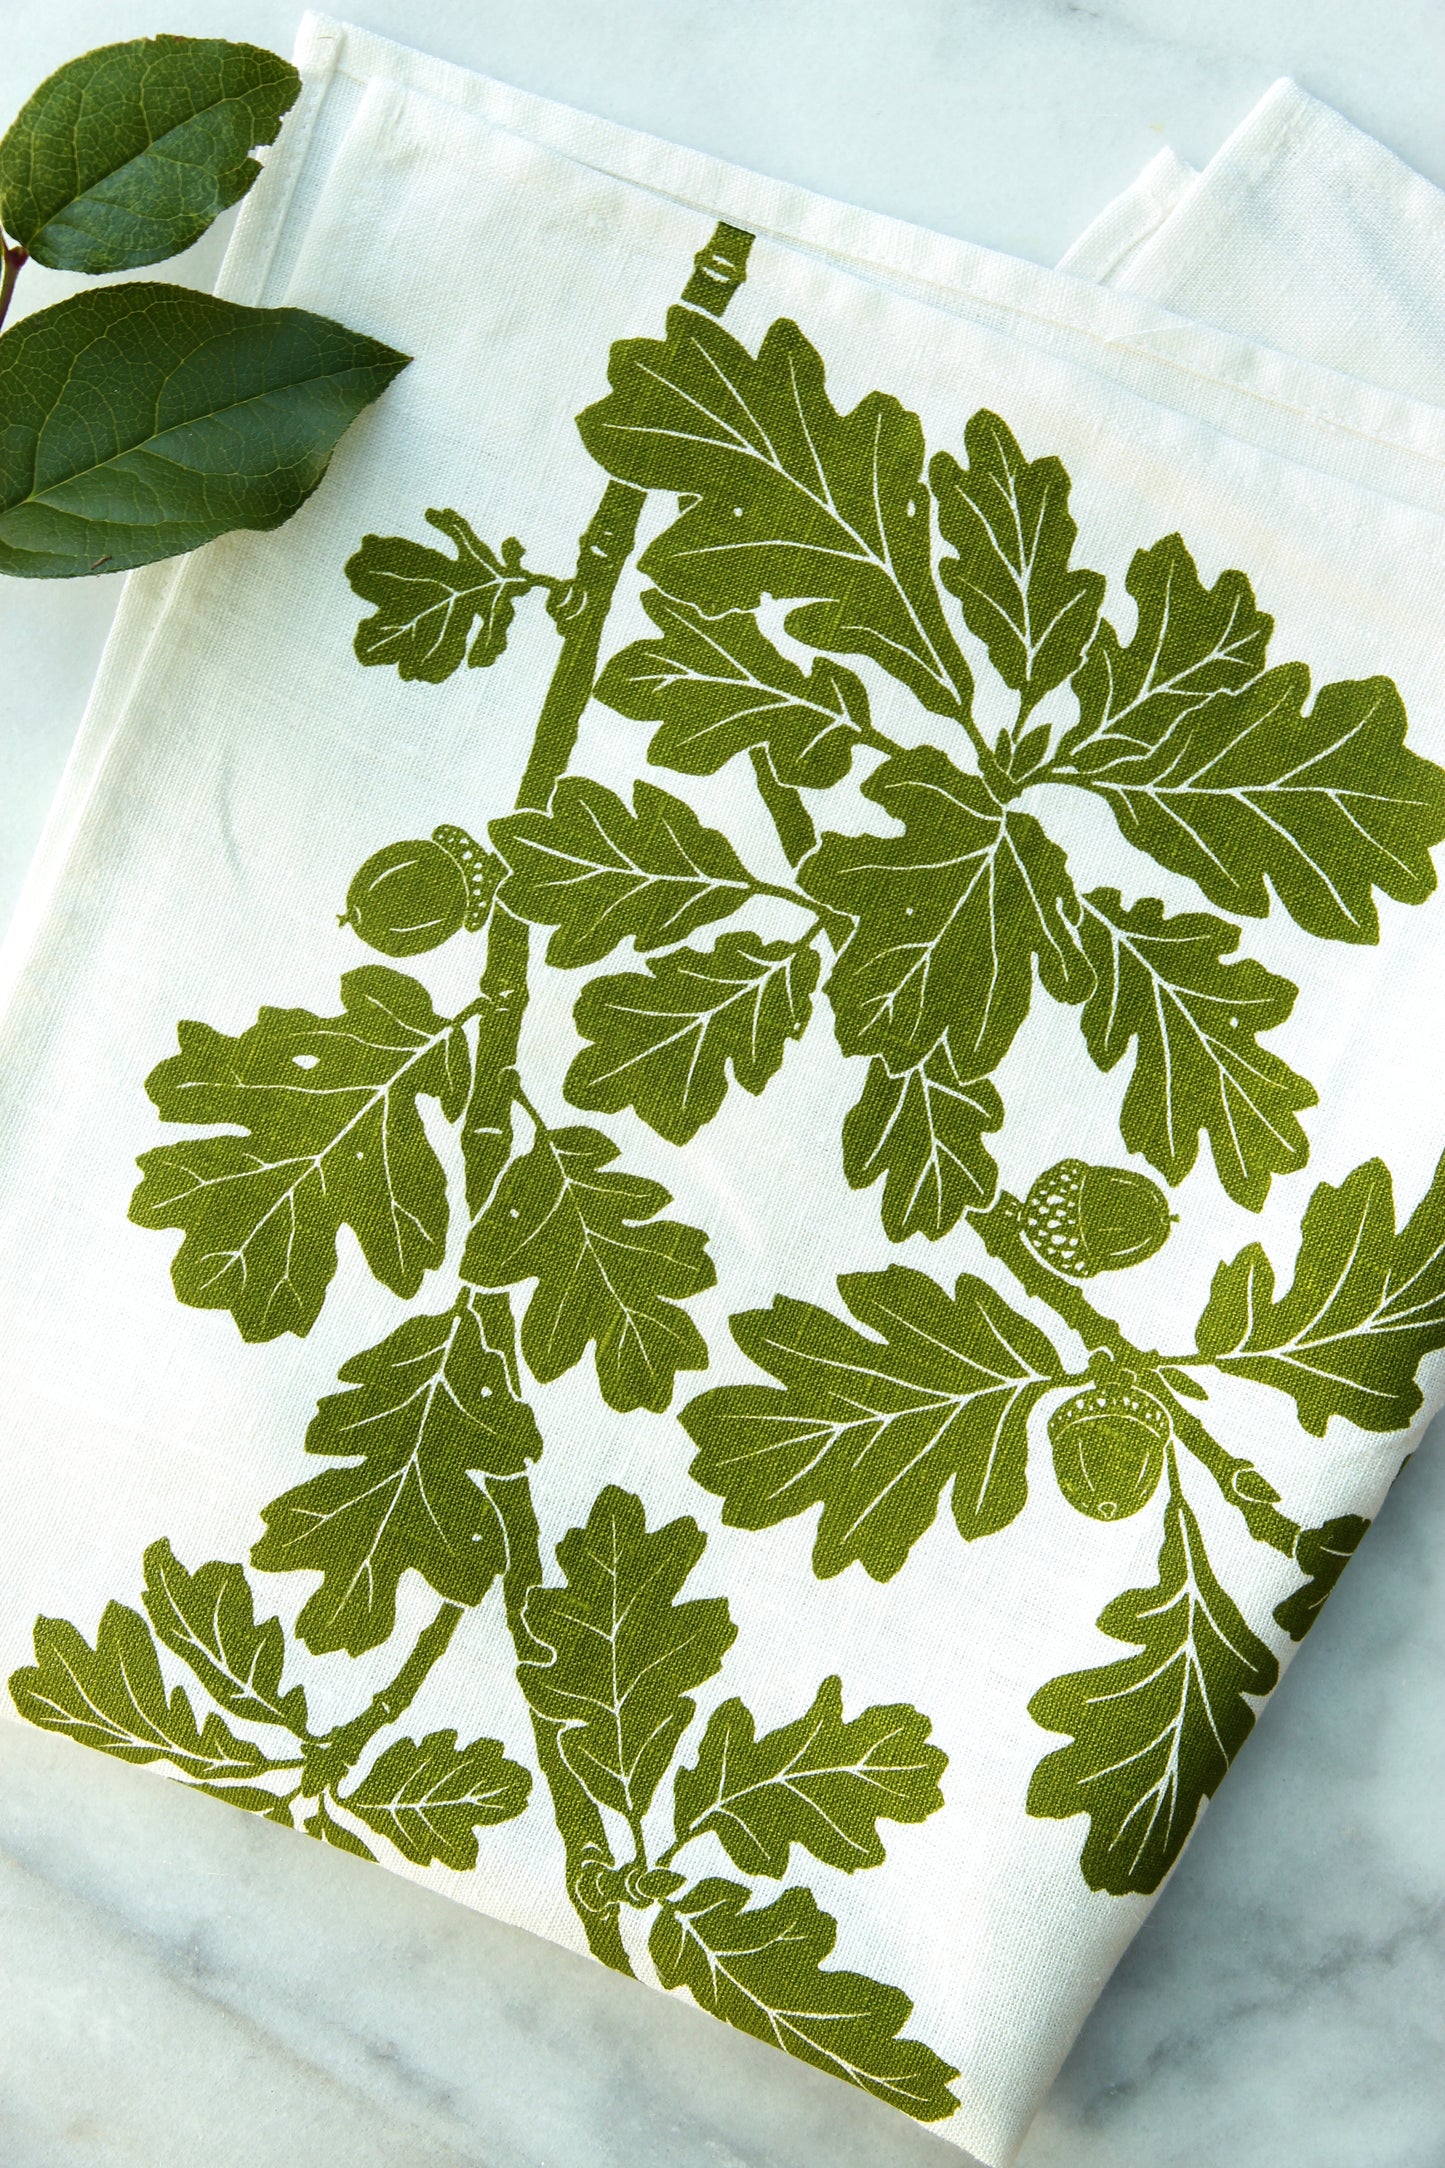 Garry Oak Kitchen Towel in Spring Green on White Linen